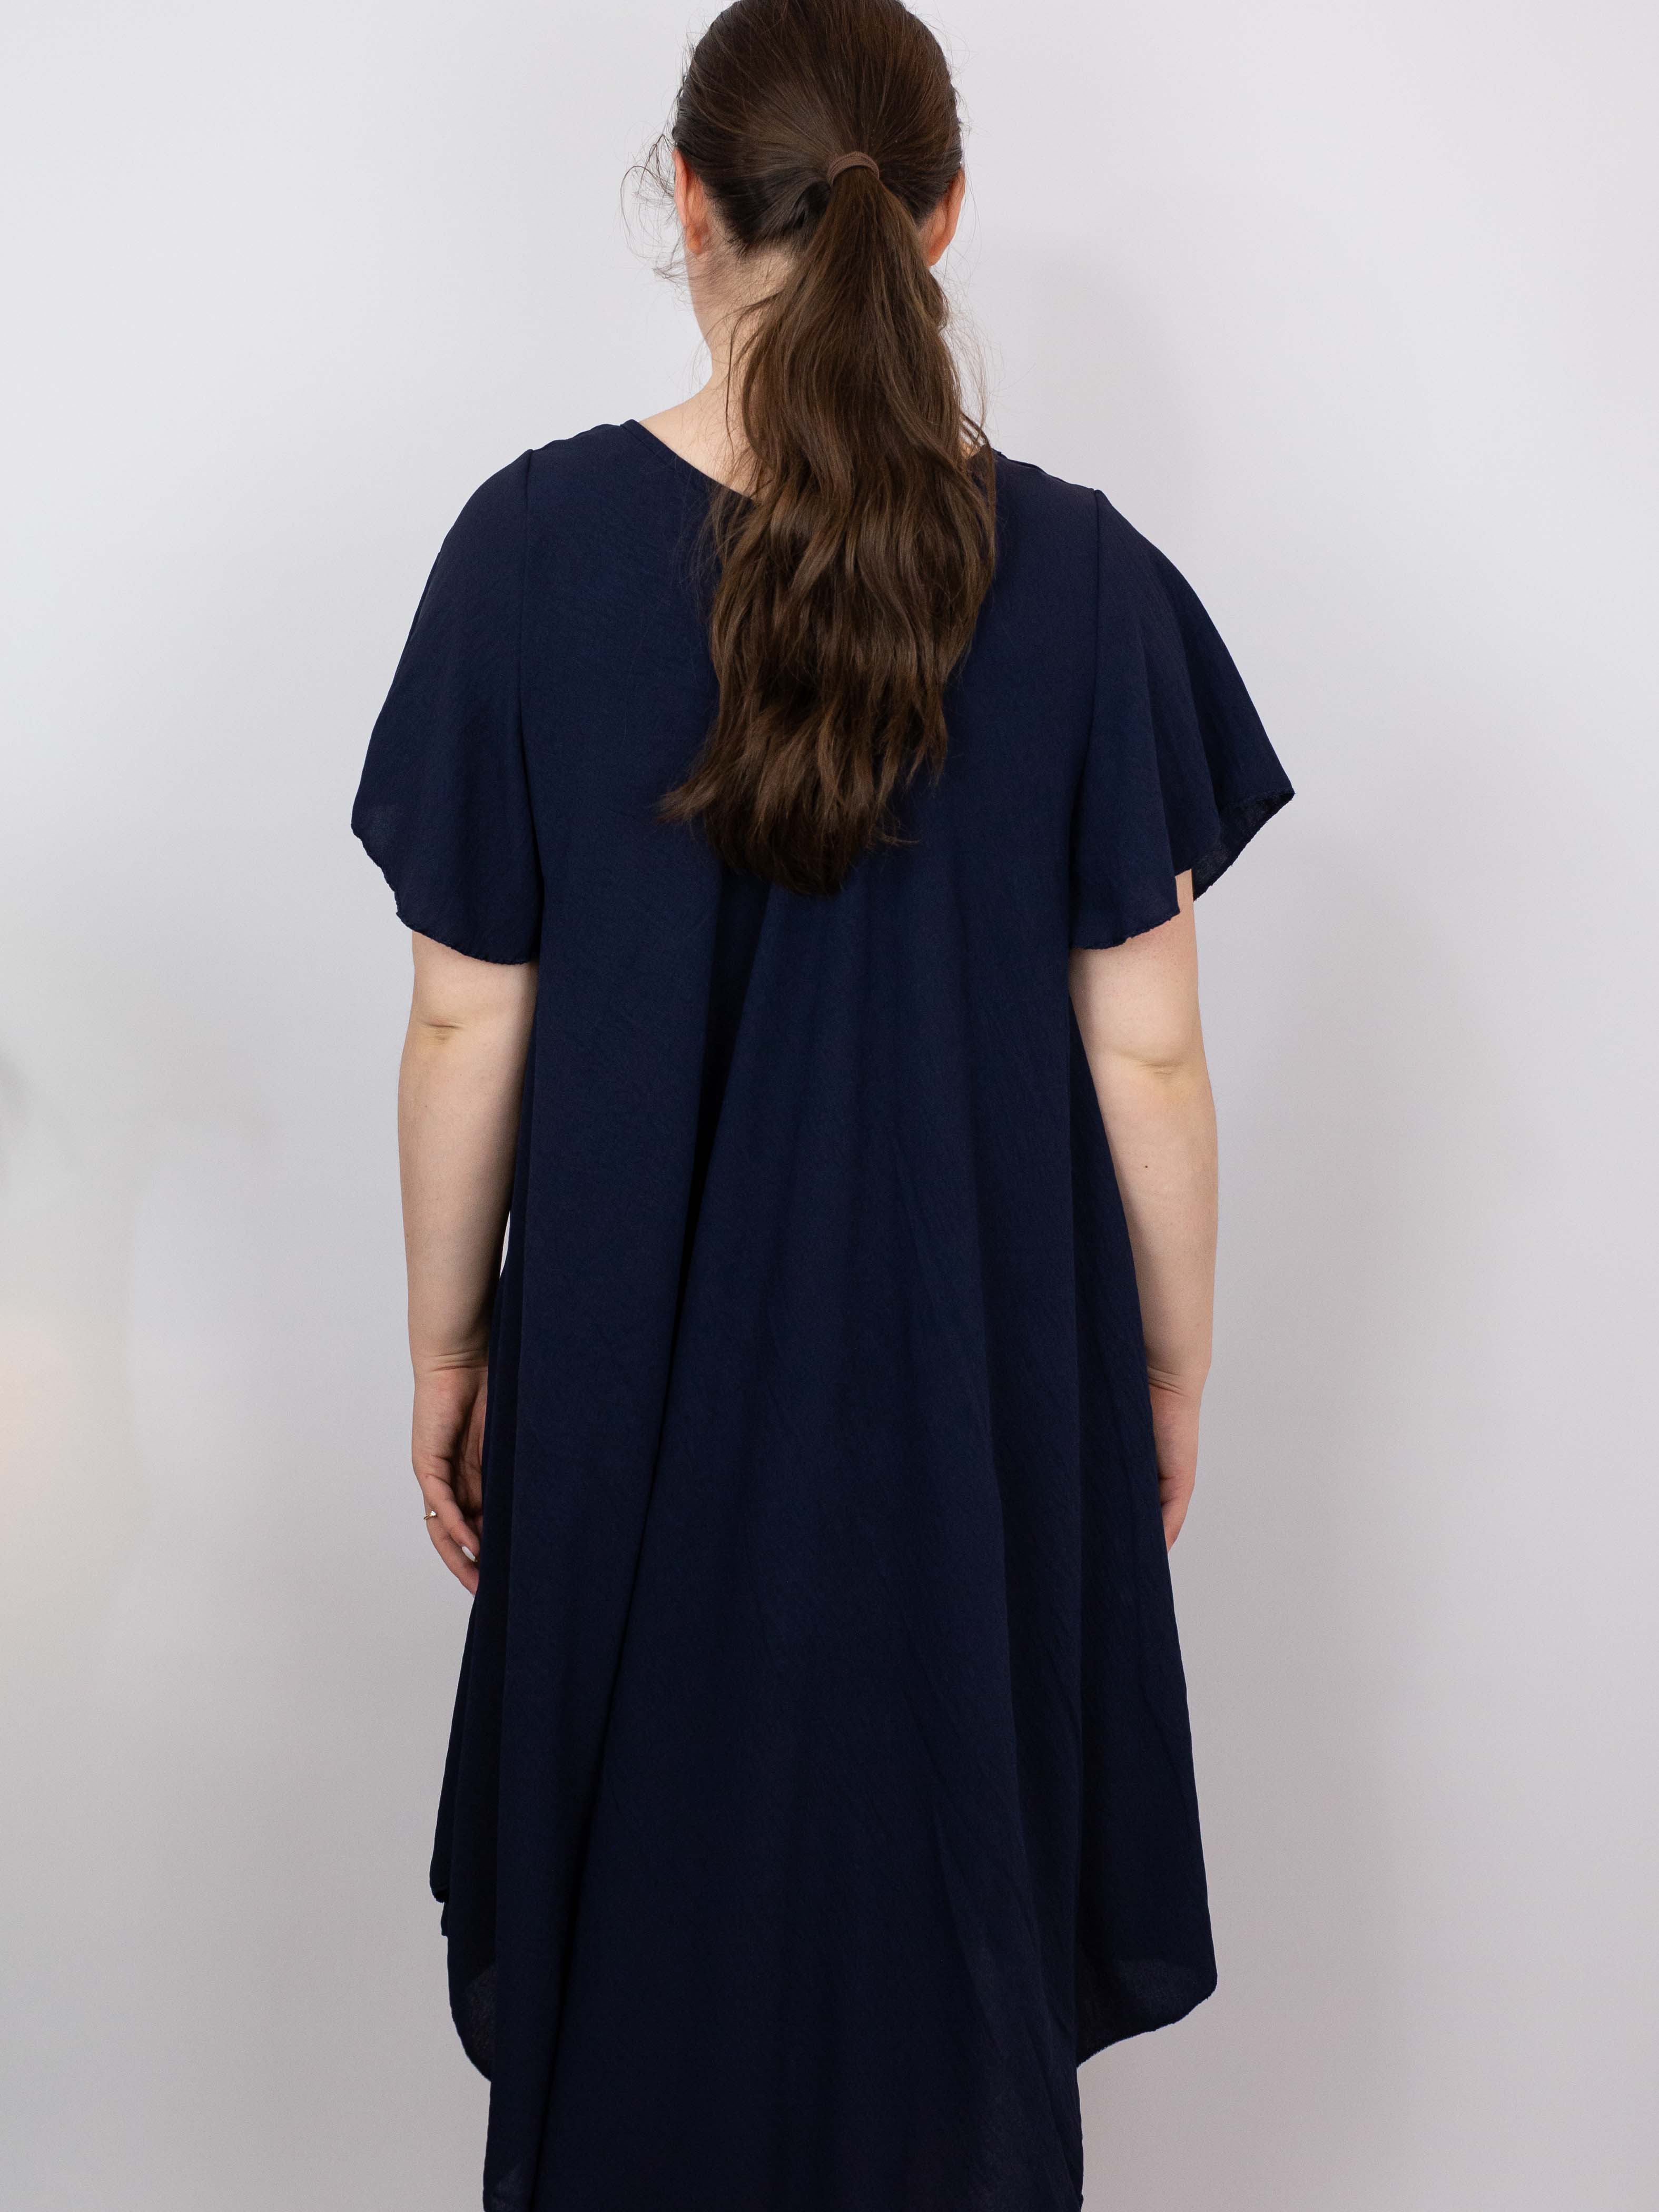 A-shape kjole - Brystmål 140cm - Ingen returret